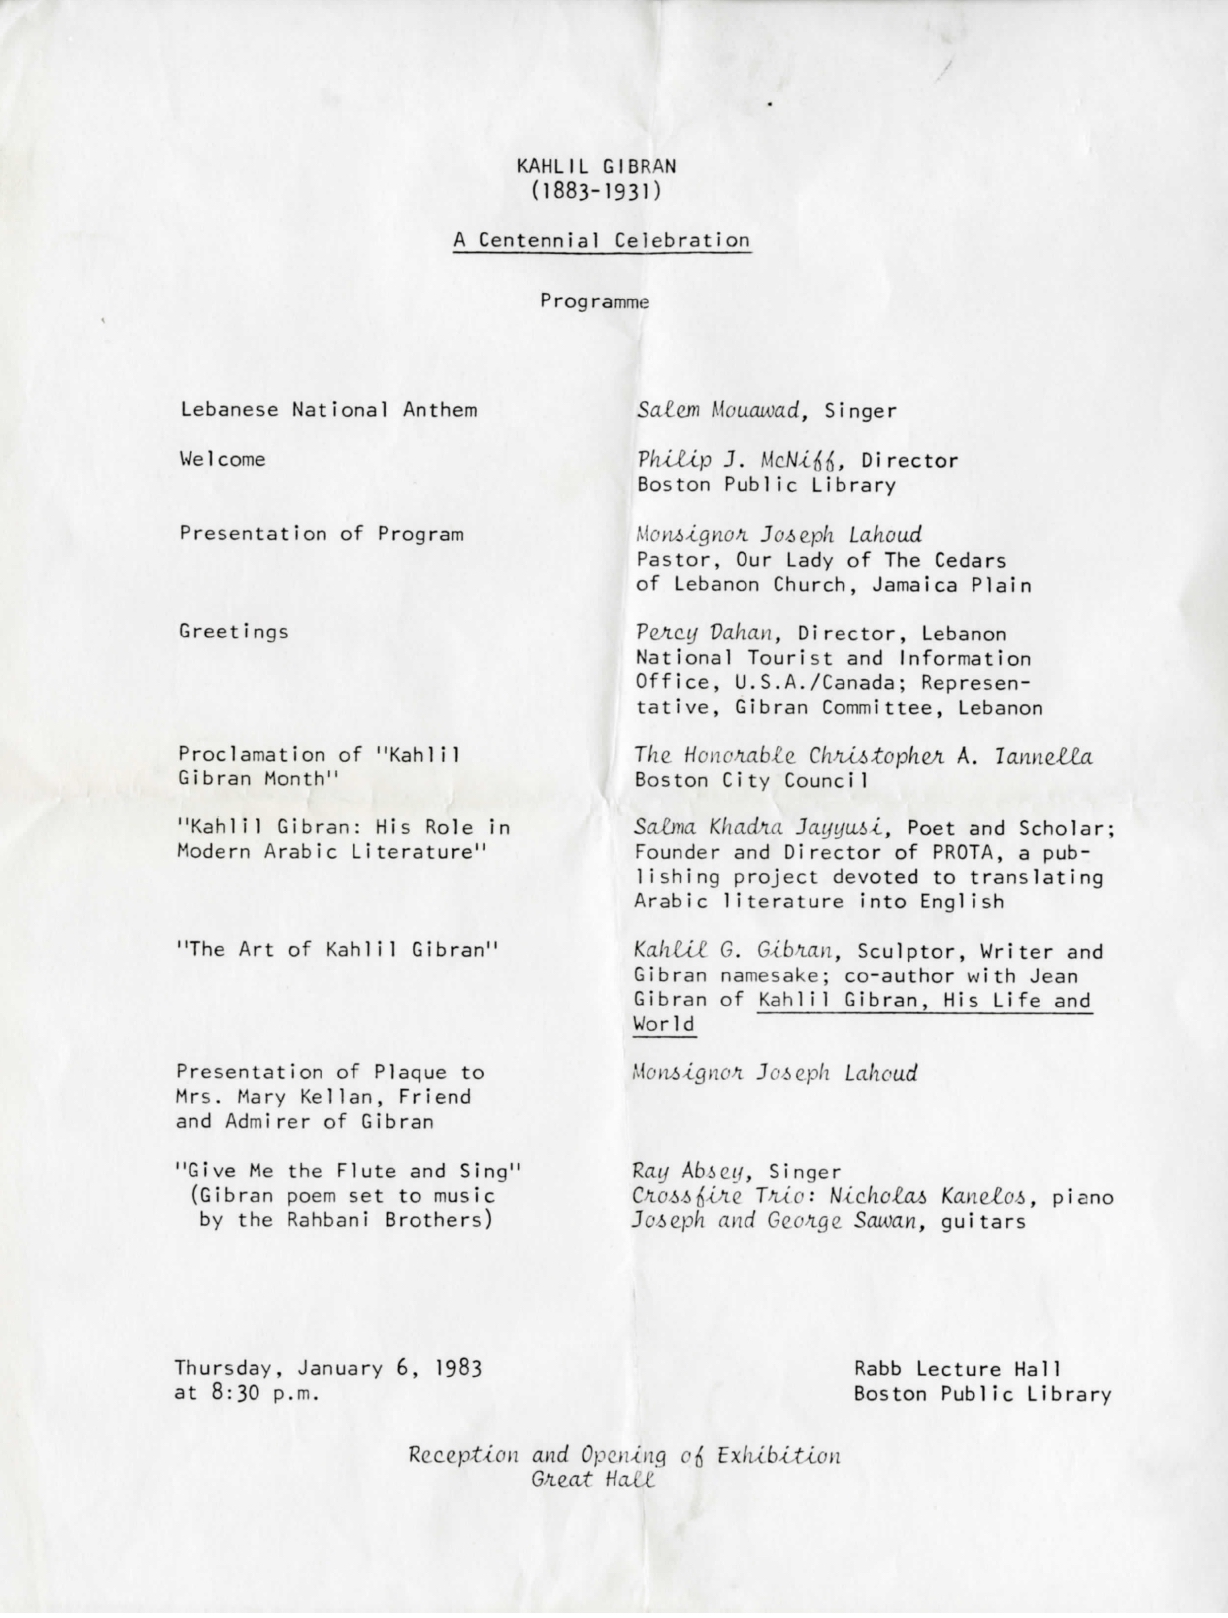 A Centennial Celebration program outline for Kahlil Gibran, Rabb Lecture Hall, Boston Public Library, January 6, 1983.